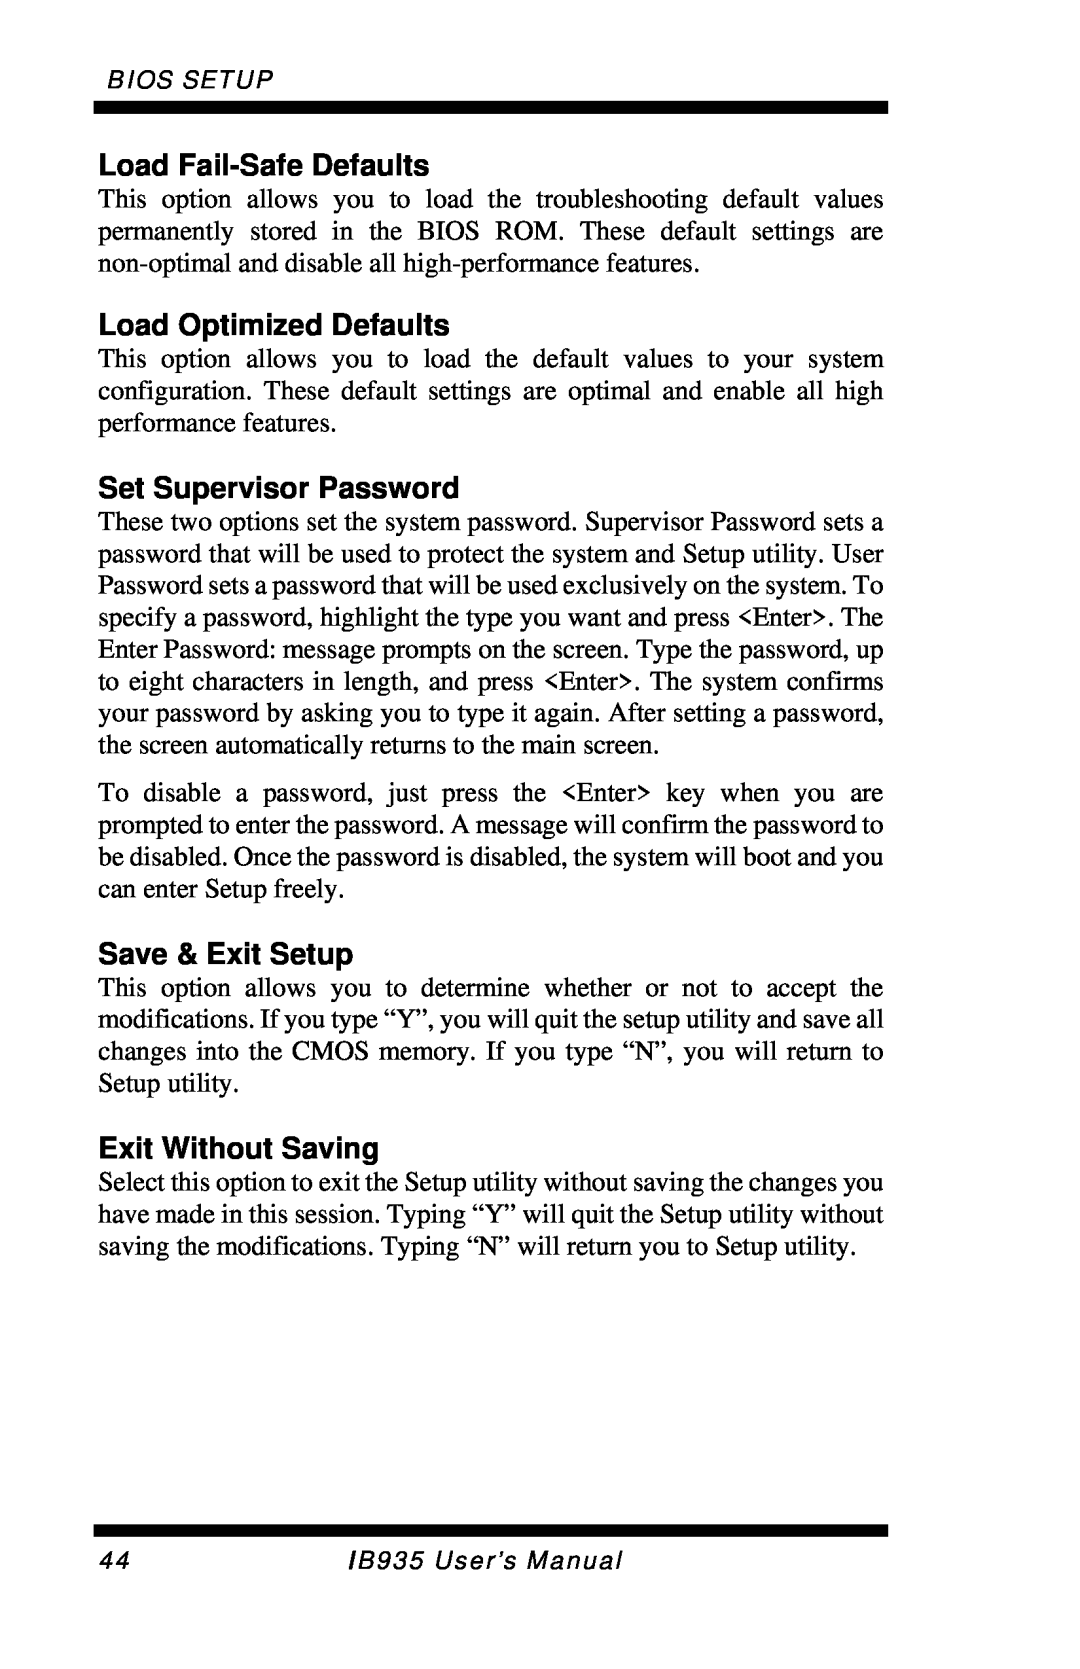 Intel IB935 user manual Load Fail-Safe Defaults, Load Optimized Defaults, Set Supervisor Password, Save & Exit Setup 